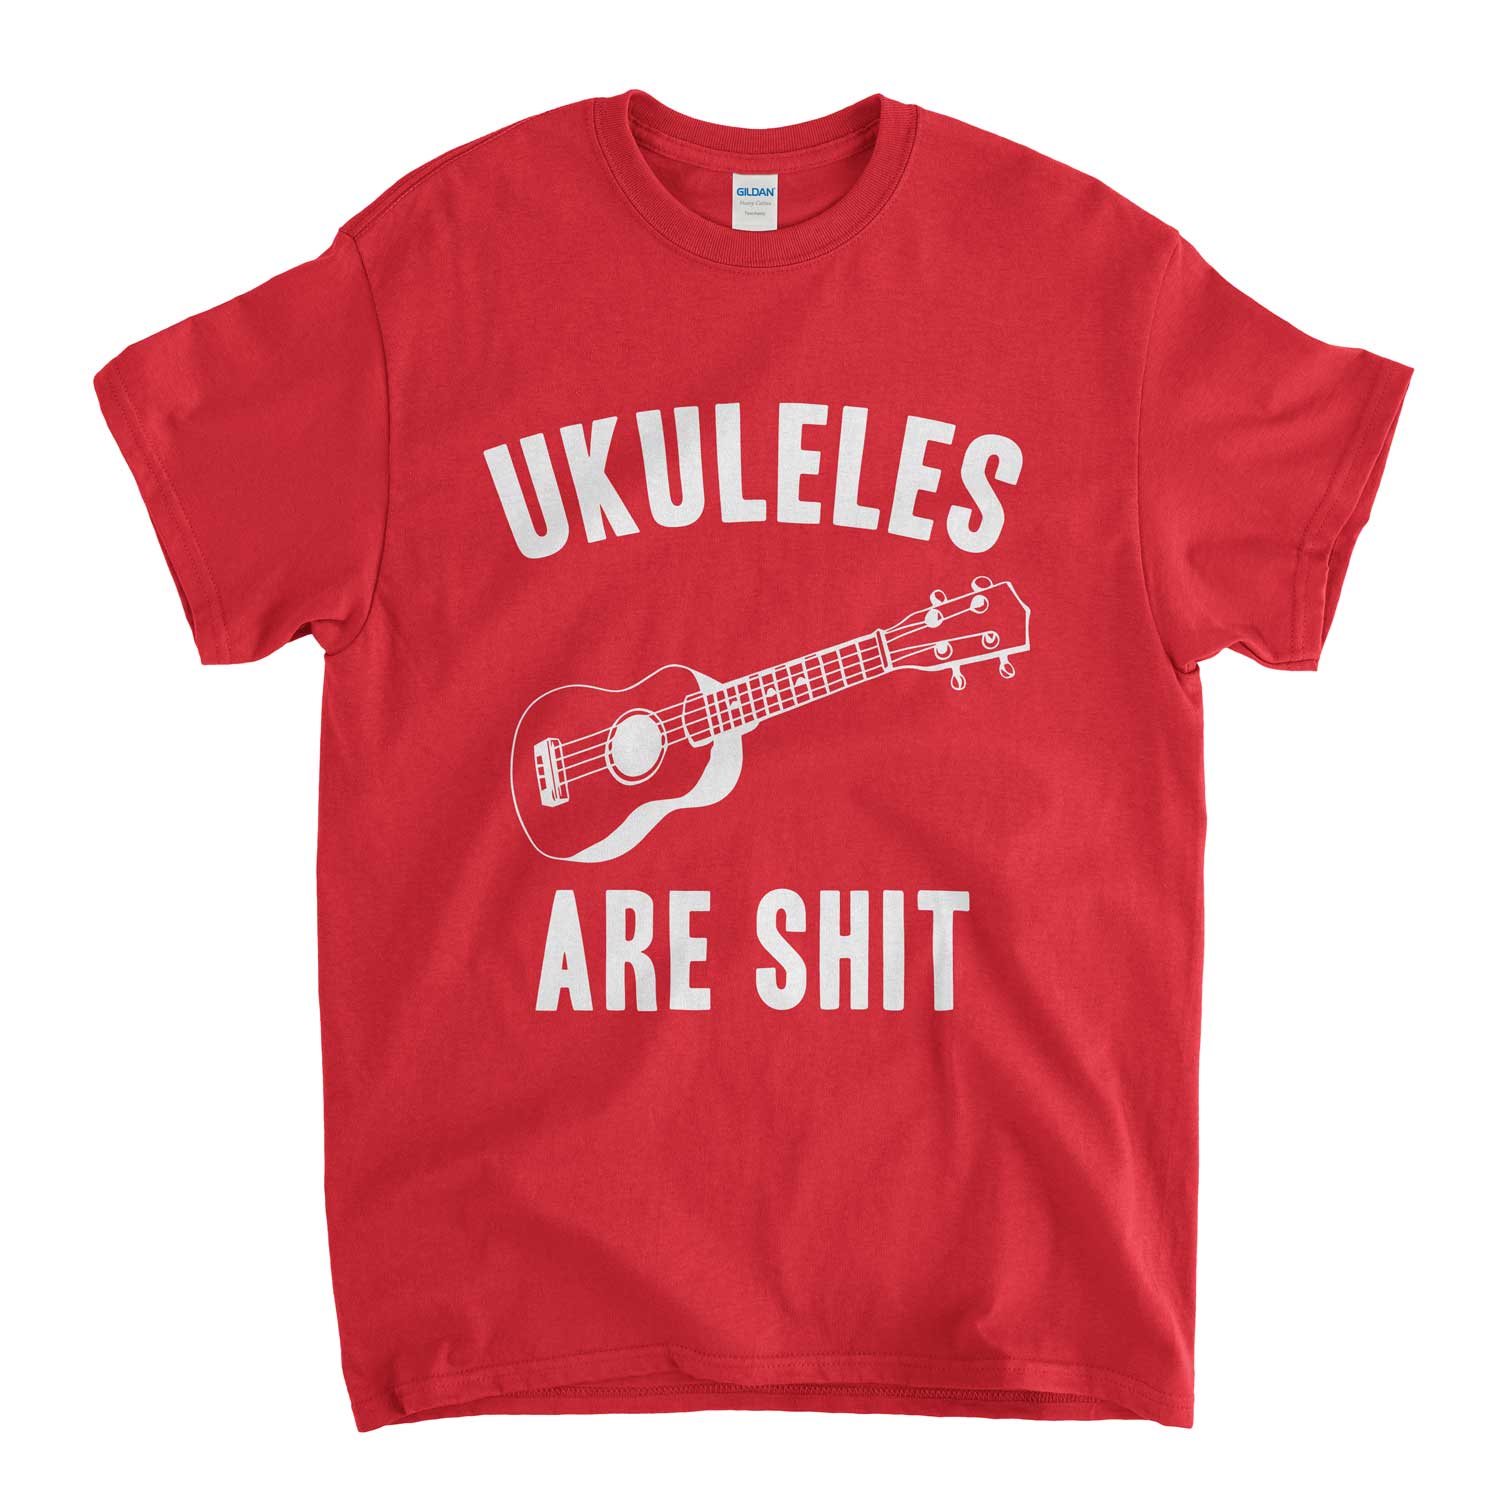 Ukuleles Are Sh*t T Shirt - An Old Skool Hooligans Anti Novelty Instrument Design